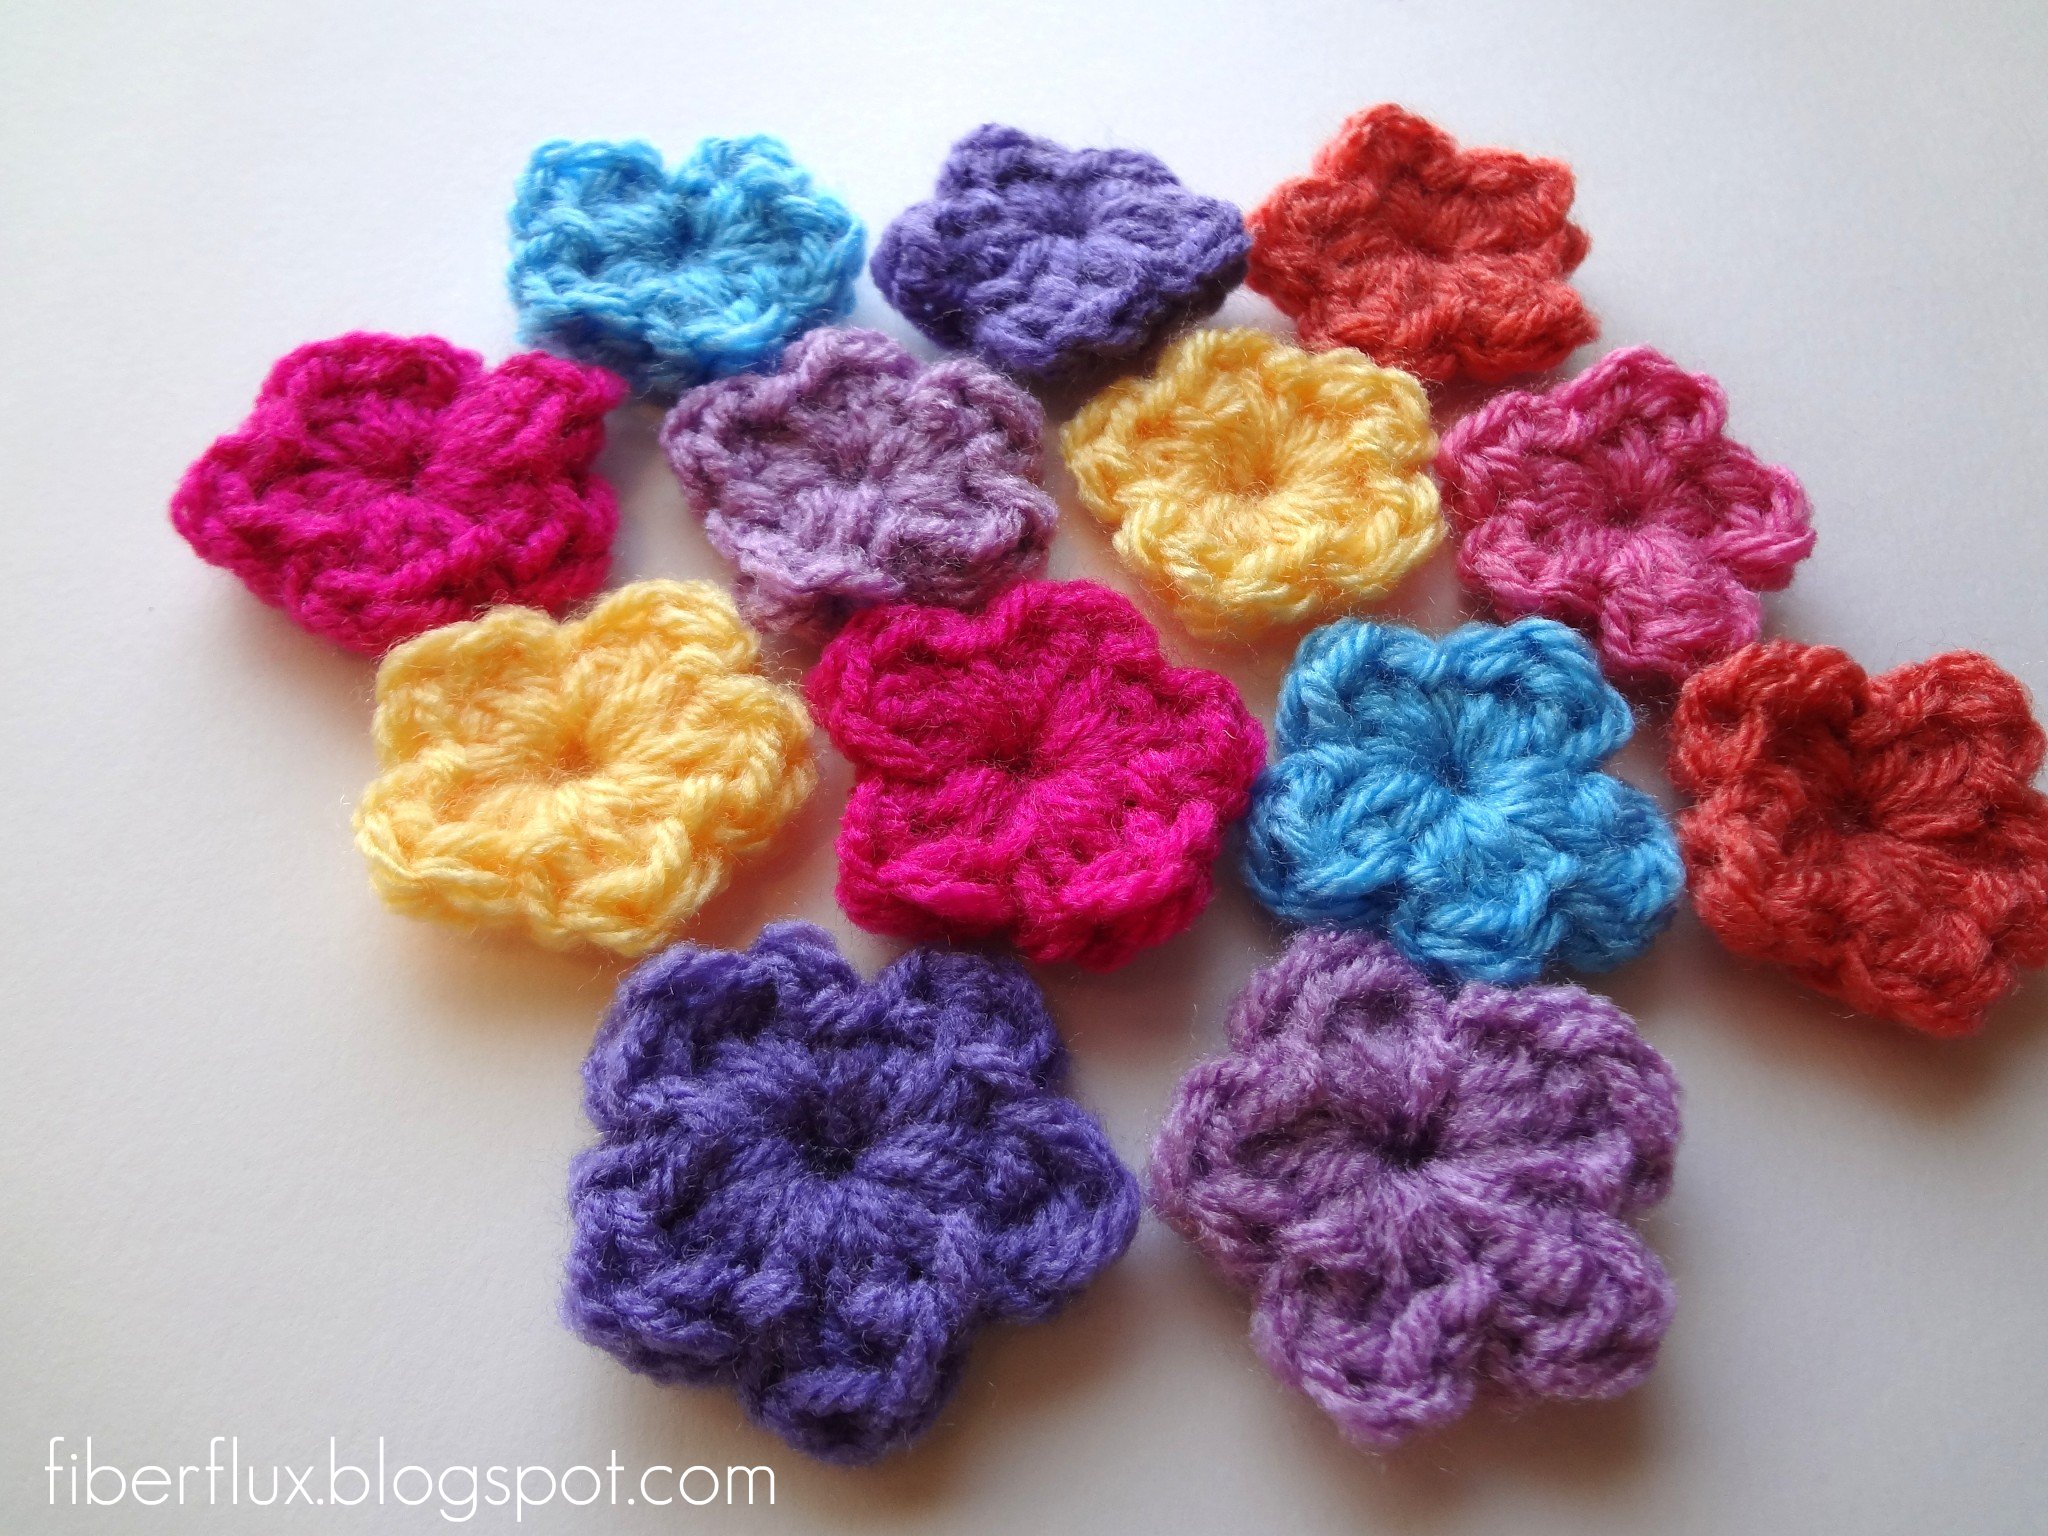 One Round Crochet Flowers